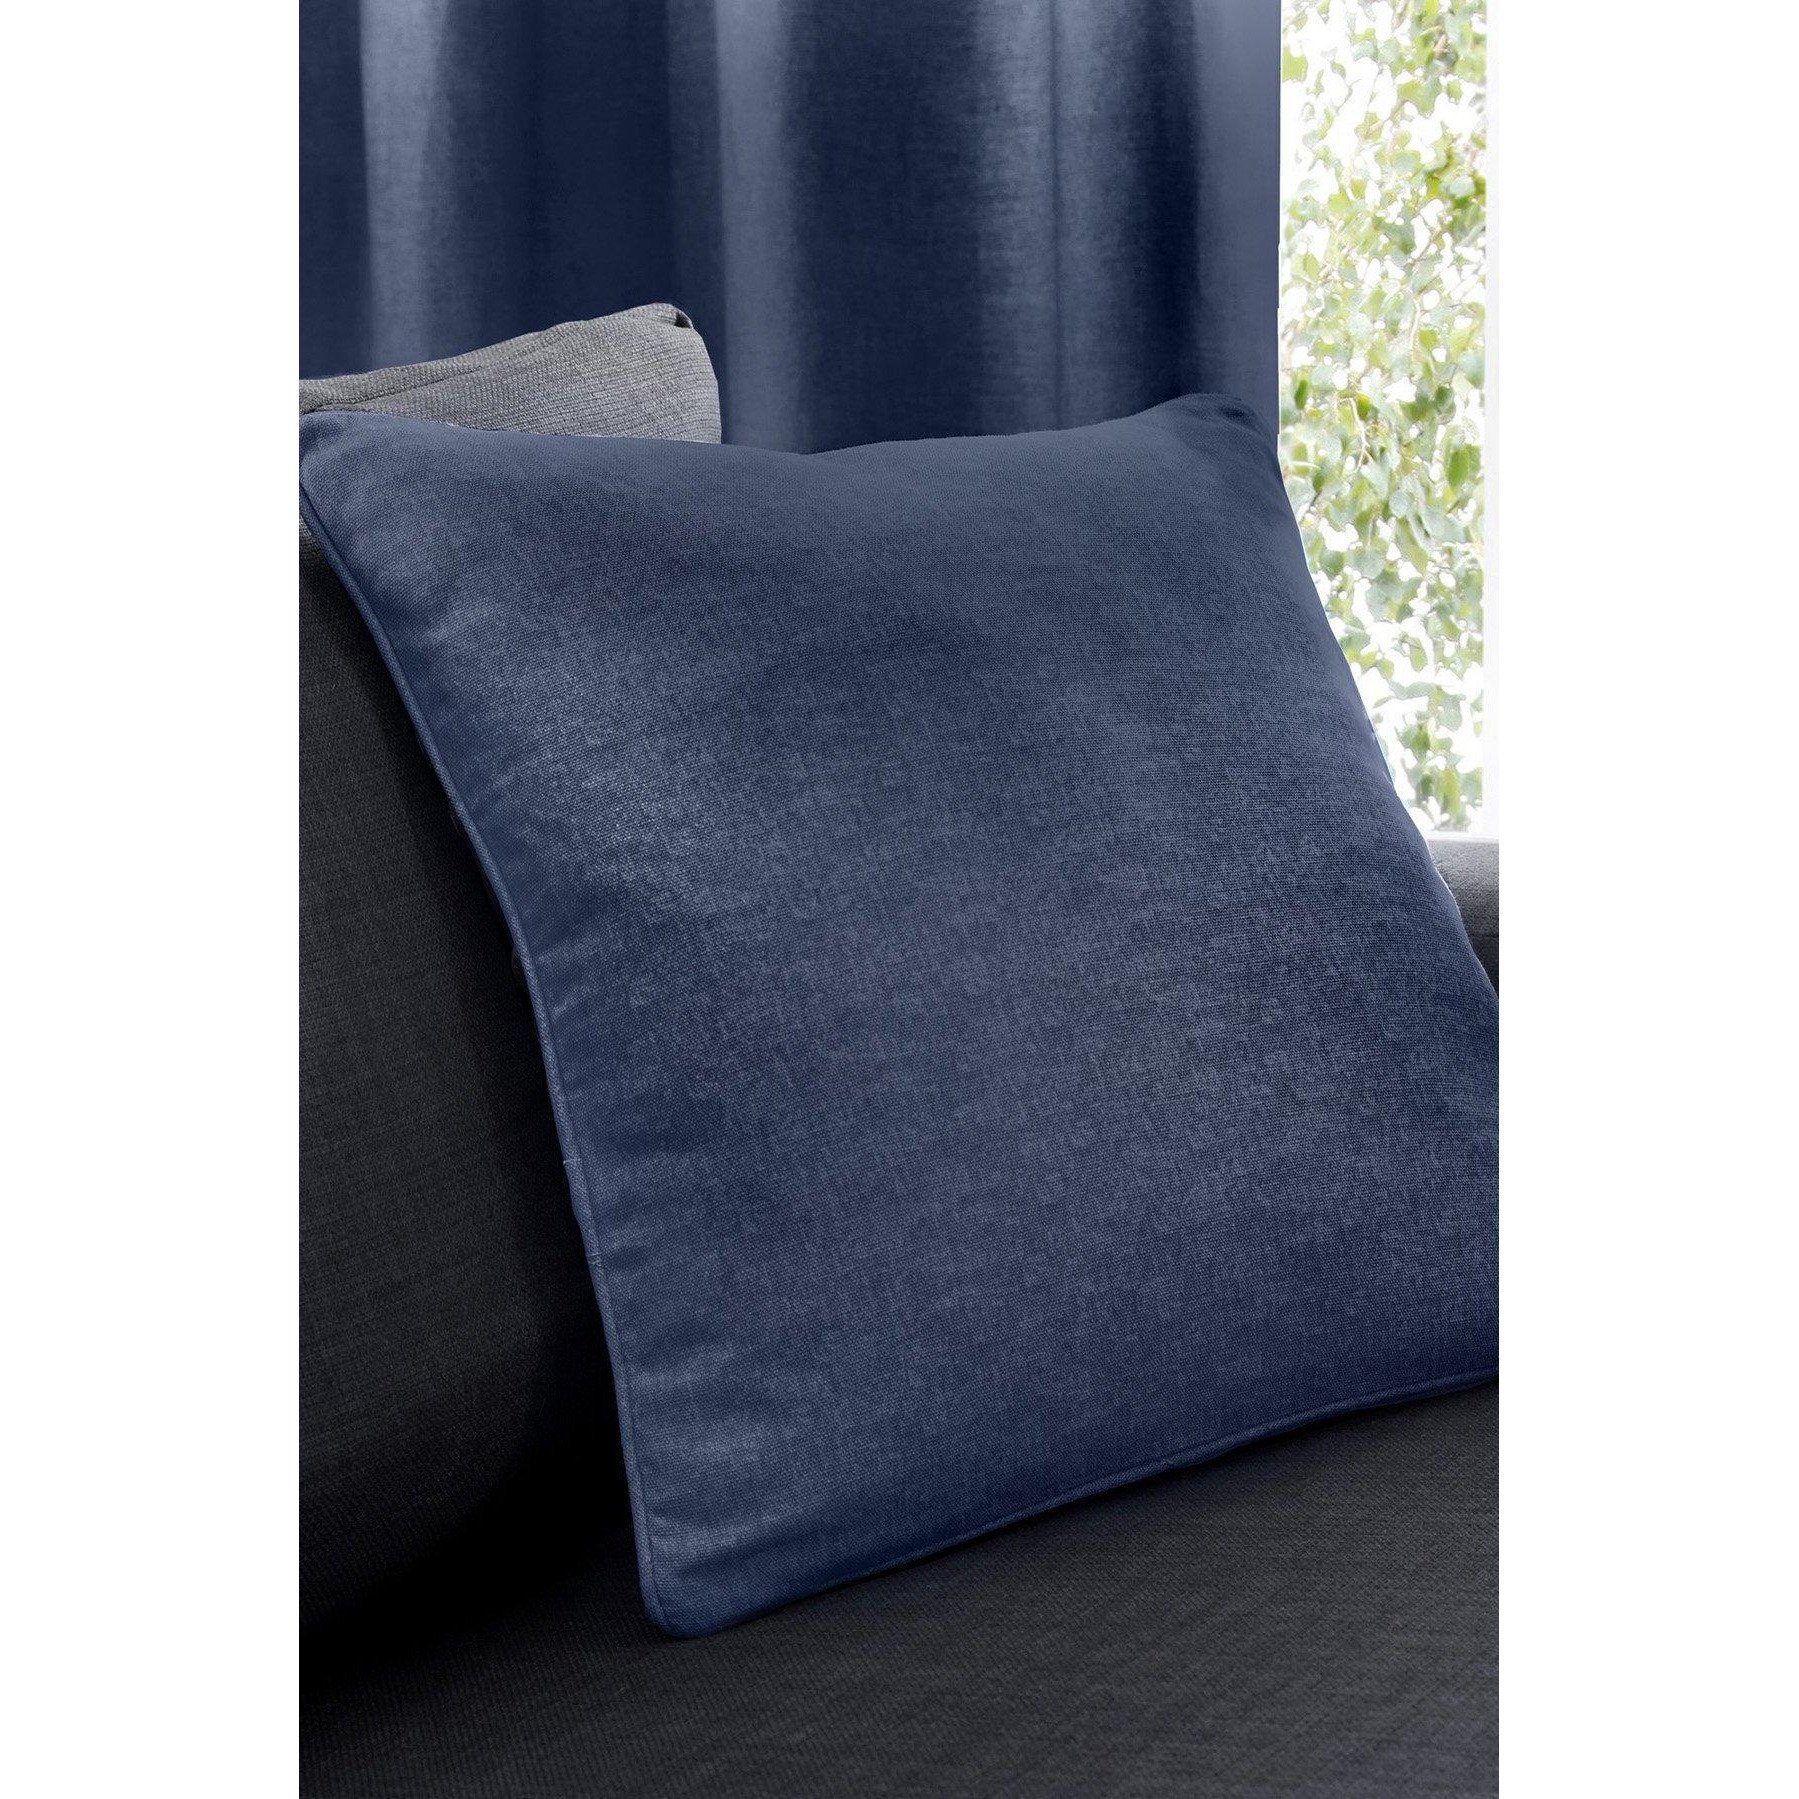 'Sorbonne' Luxury Plain Dyed Filled Cushion 100% Cotton - image 1